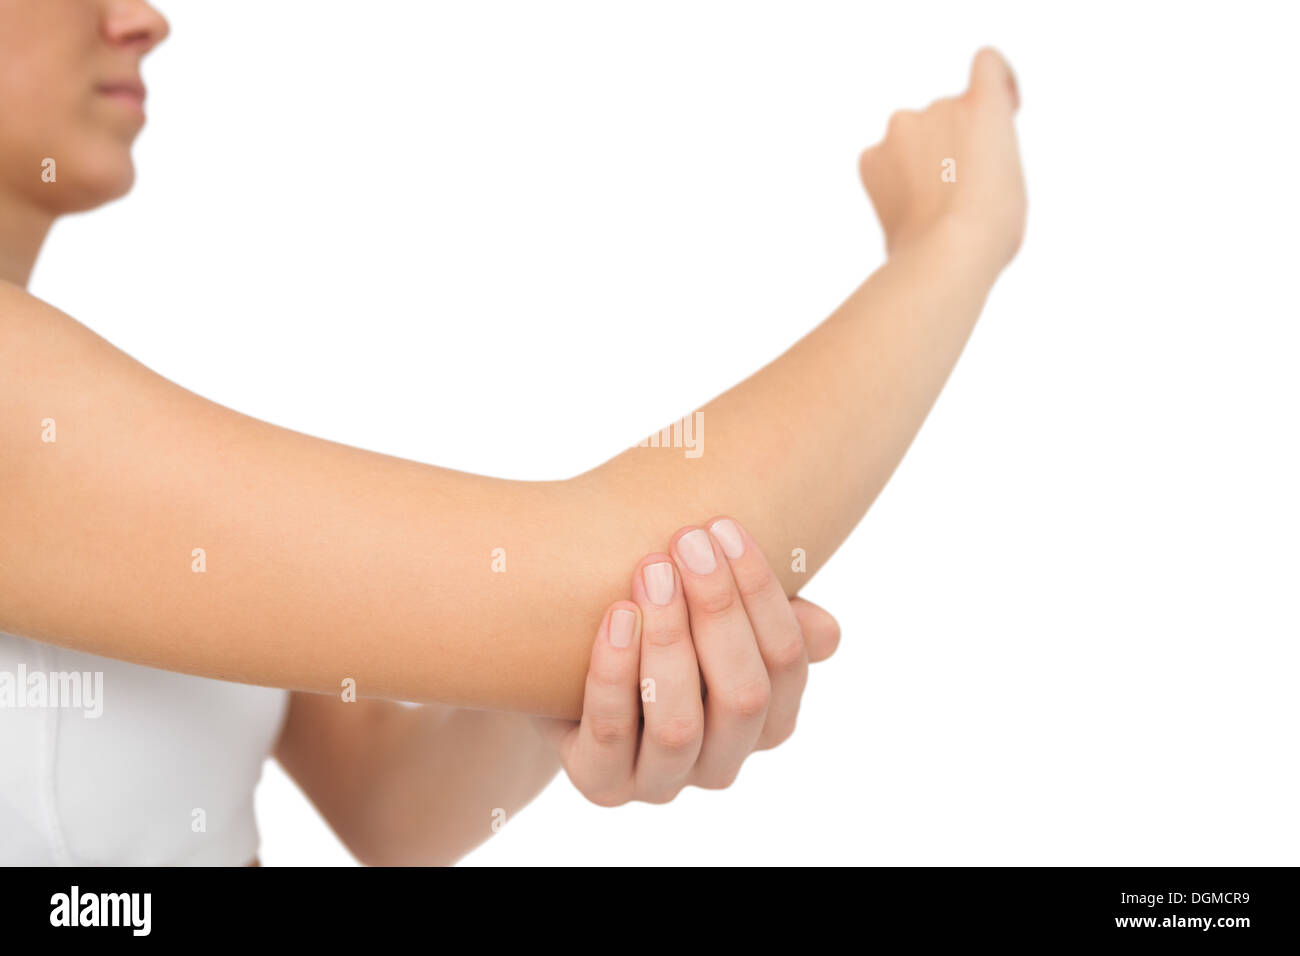 Woman touching her sore elbow Stock Photo